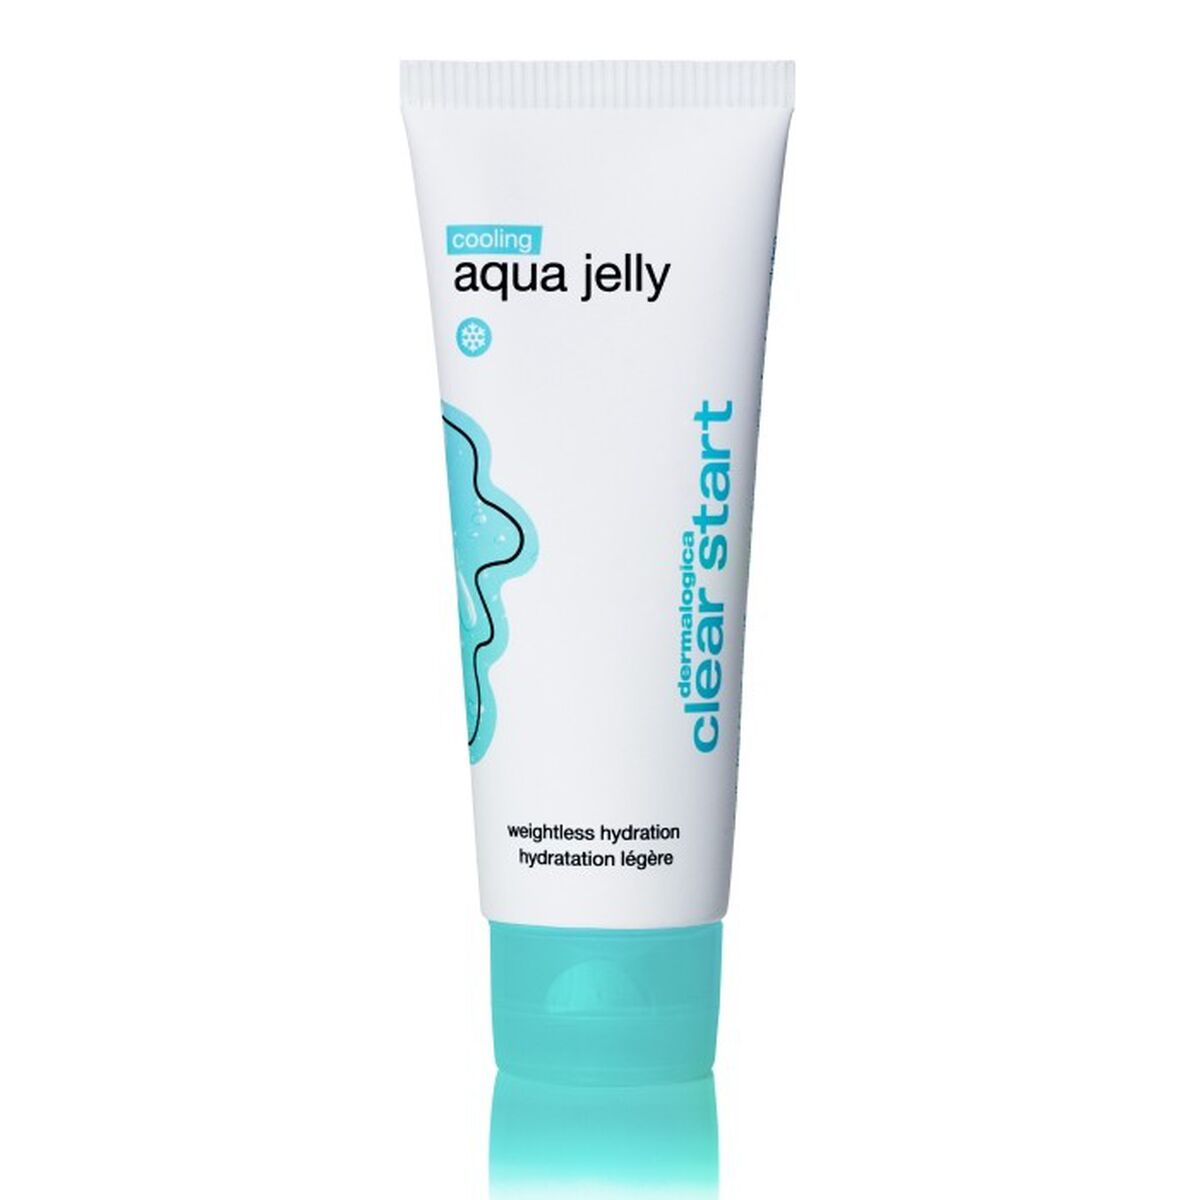 Facial Gel Dermalogica Cooling Aqua Jelly 59 ml Mattifying finish